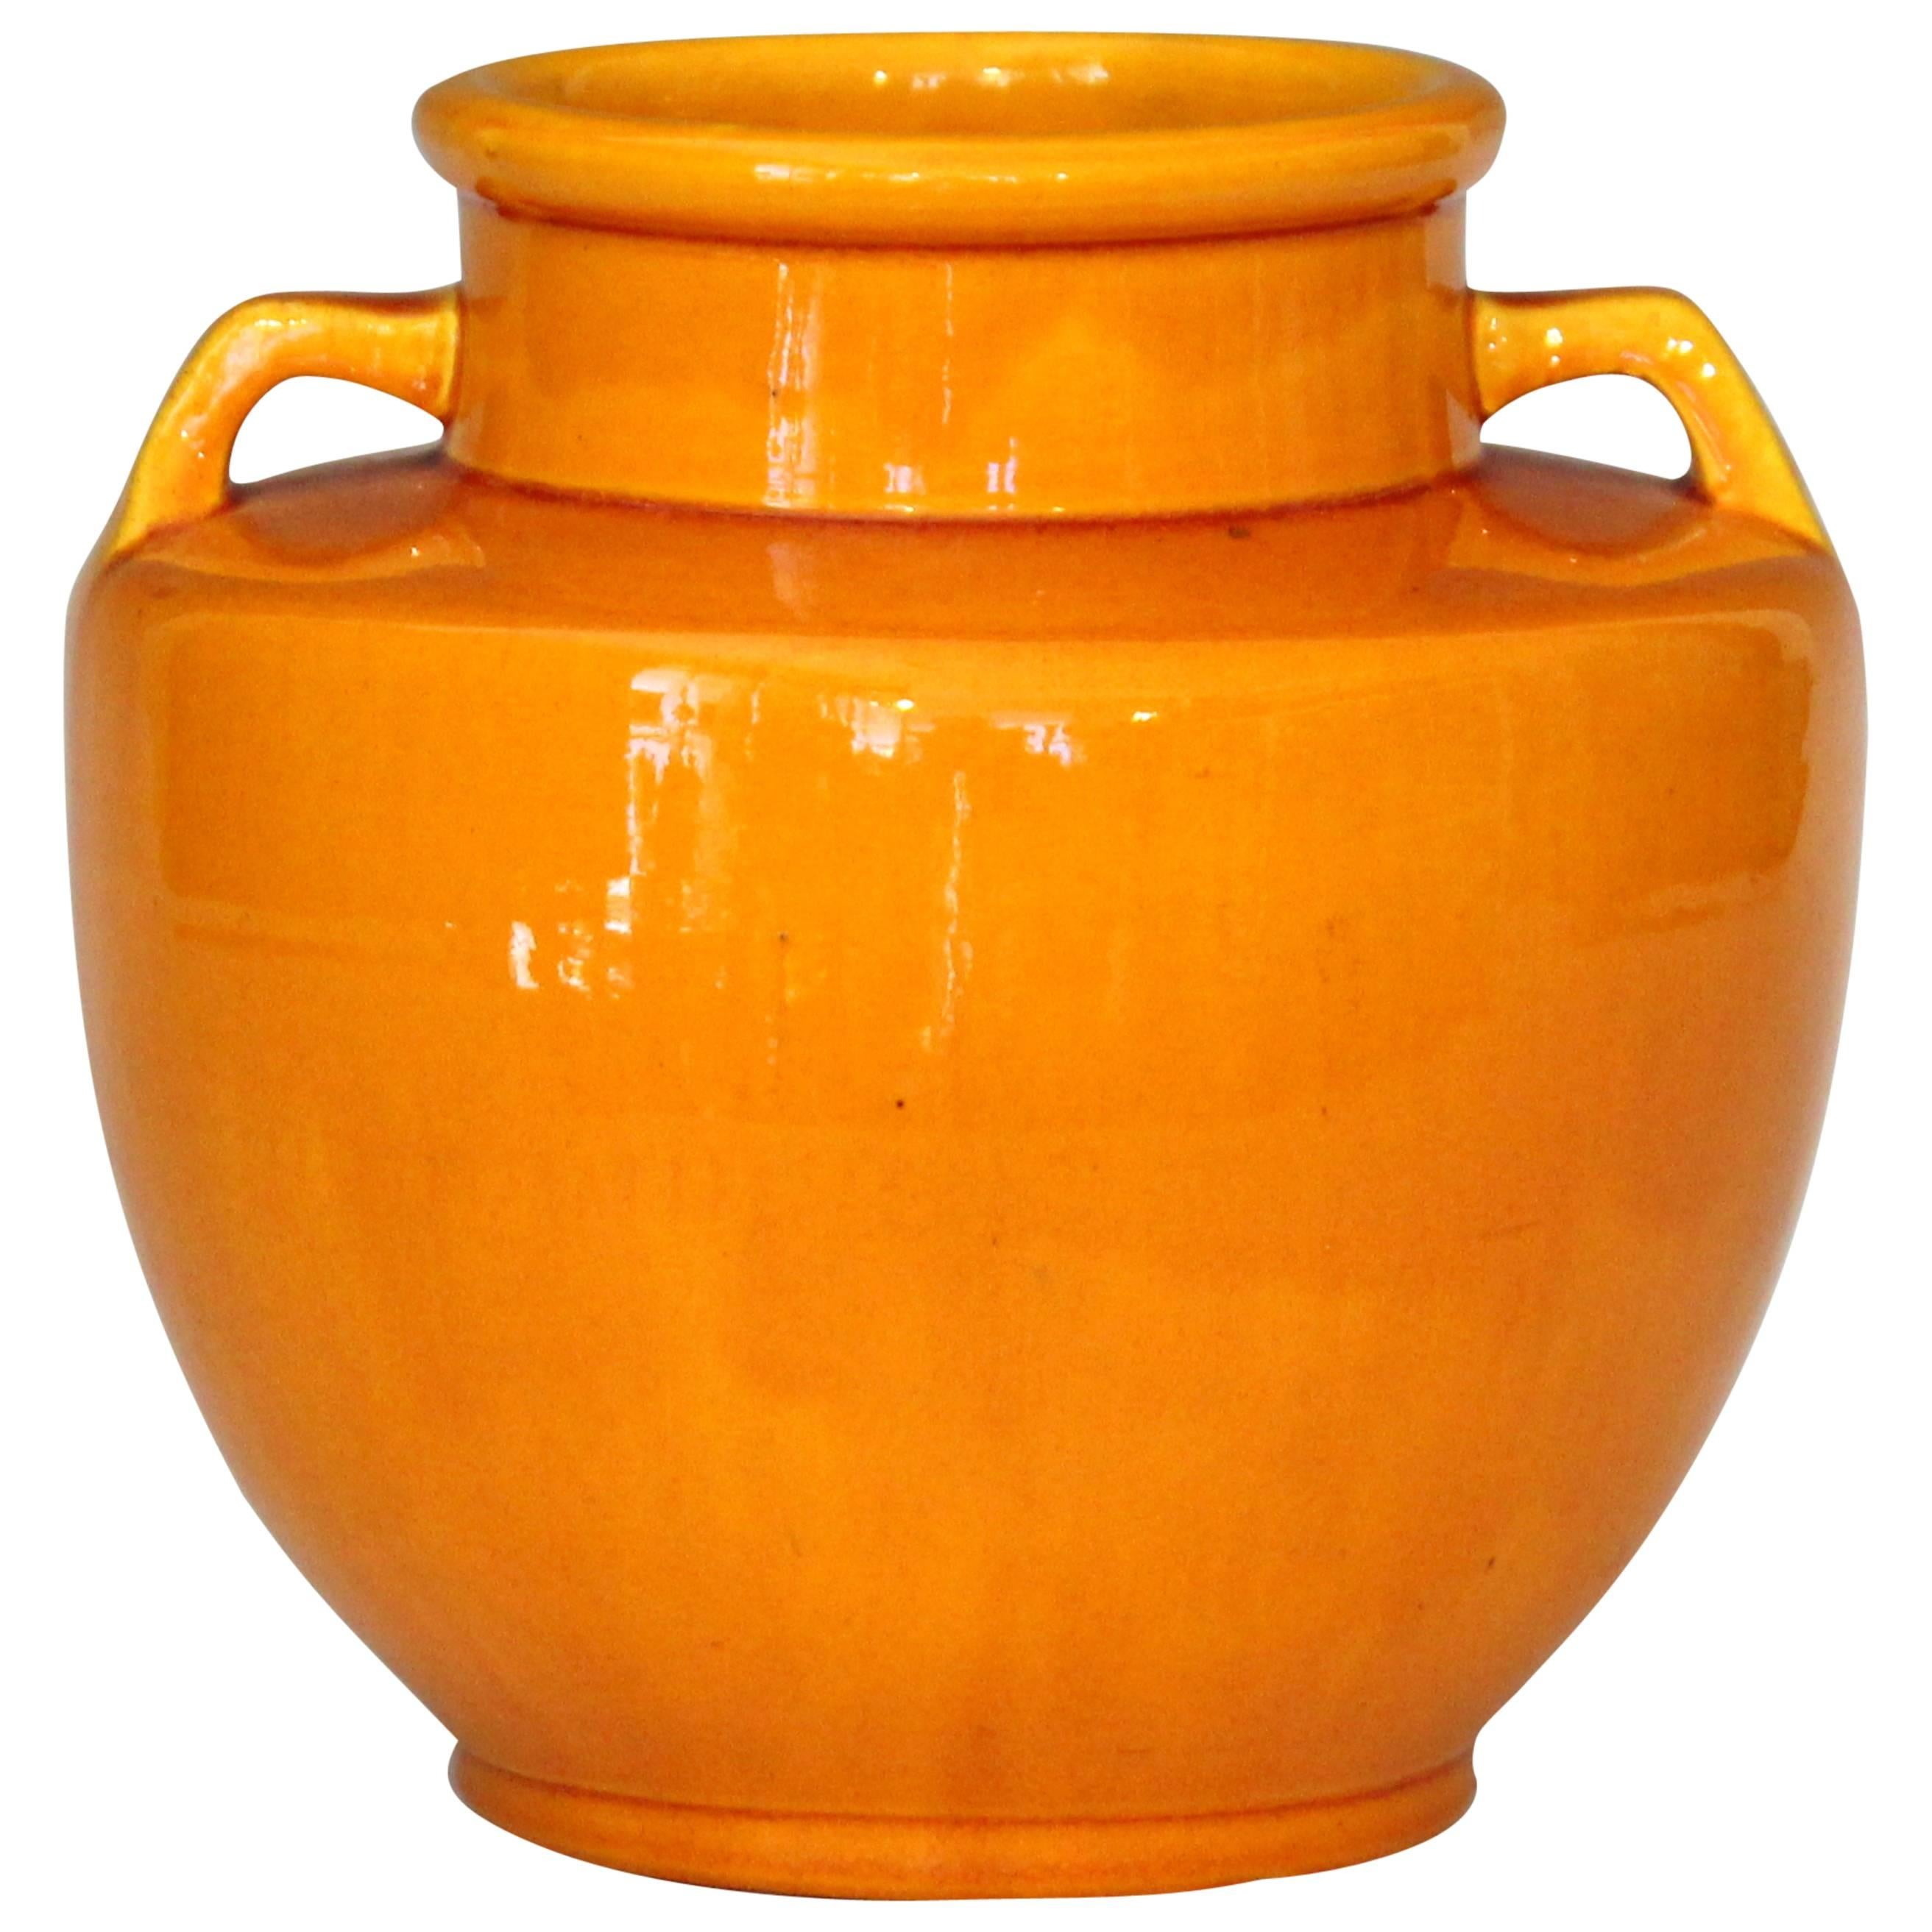 Awaji Pottery Japanese Art Deco Vase with Bright Yellow Monochrome Glaze